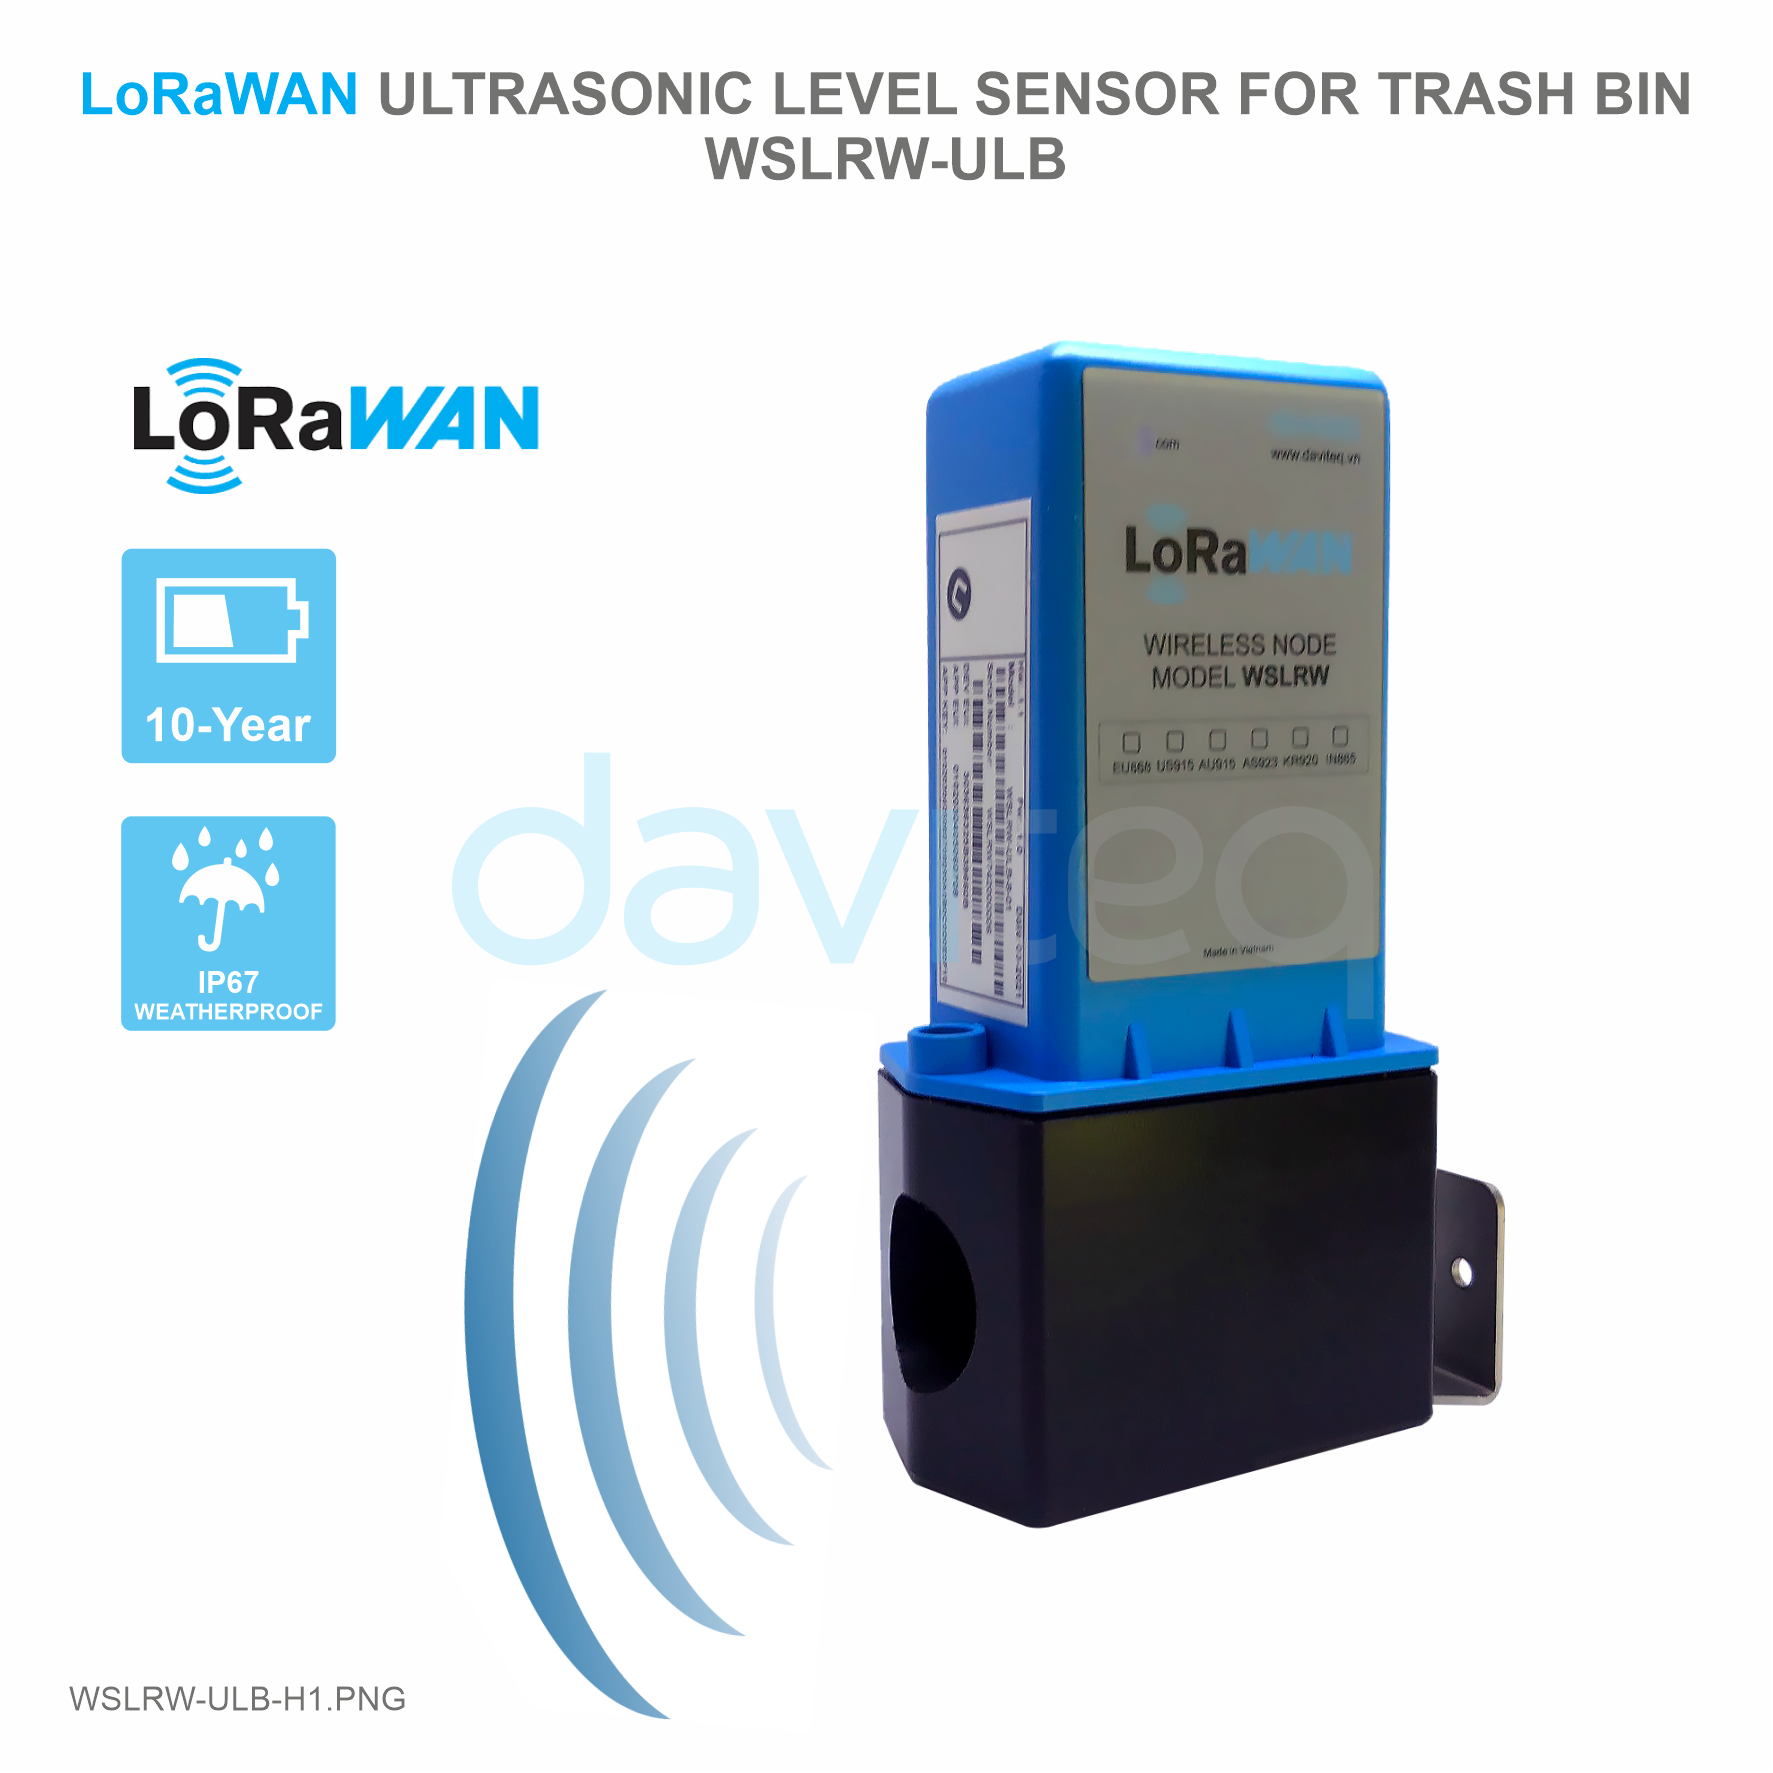 LoRaWAN Ultrasonic Level Sensor for Trash Bin